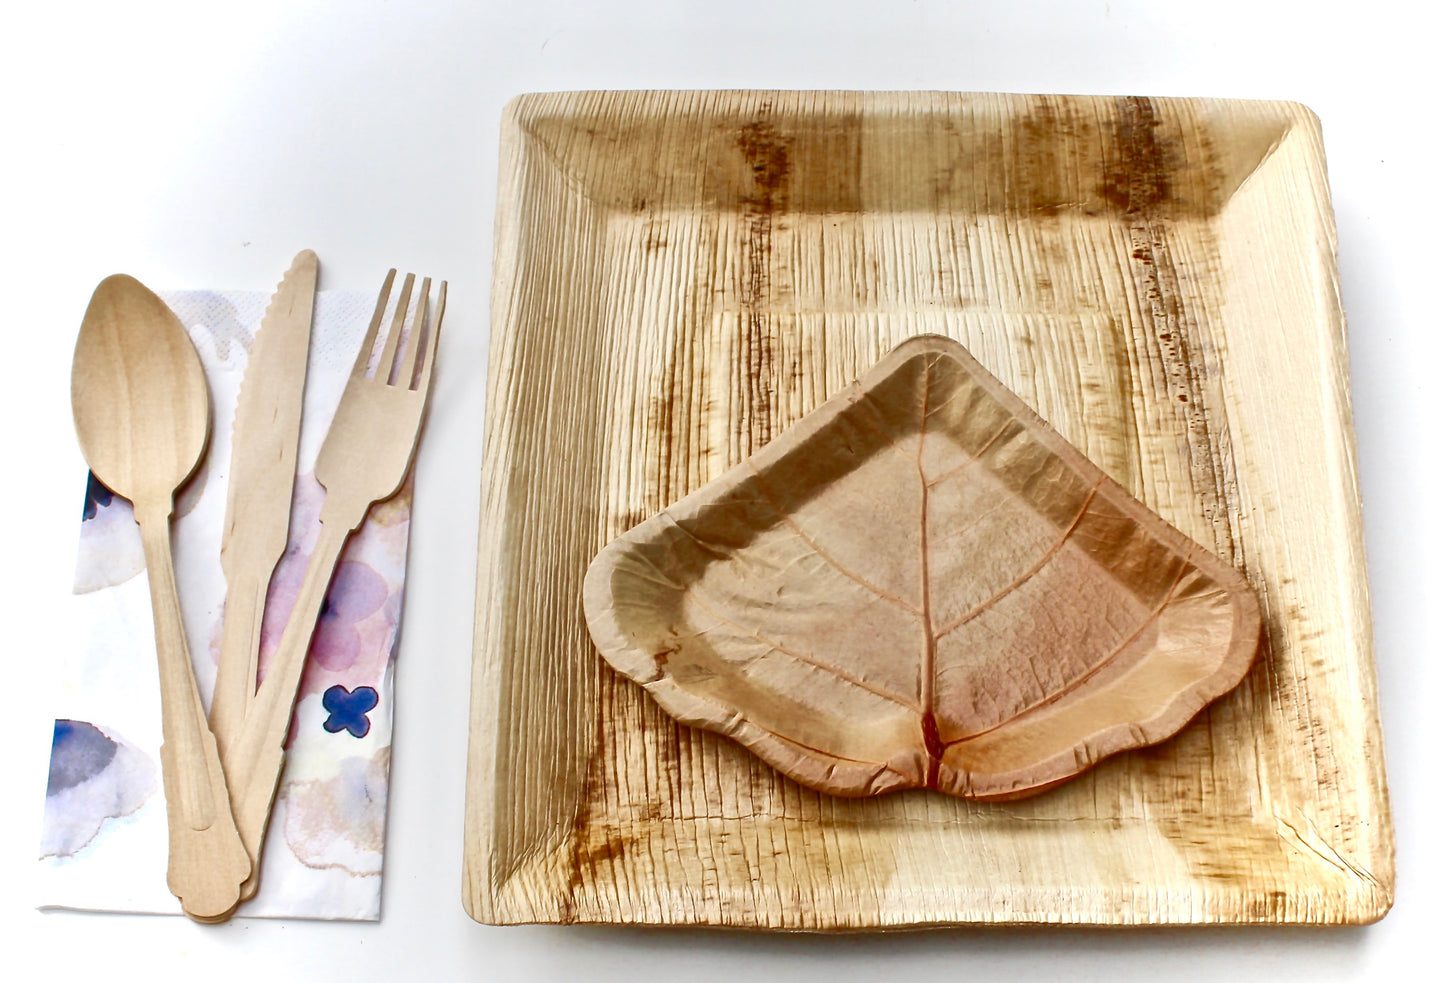 palm leaf plates 20 pic Square 10" and 20 pic Sea Grape 7" dessert plate disposable - Biodergadable